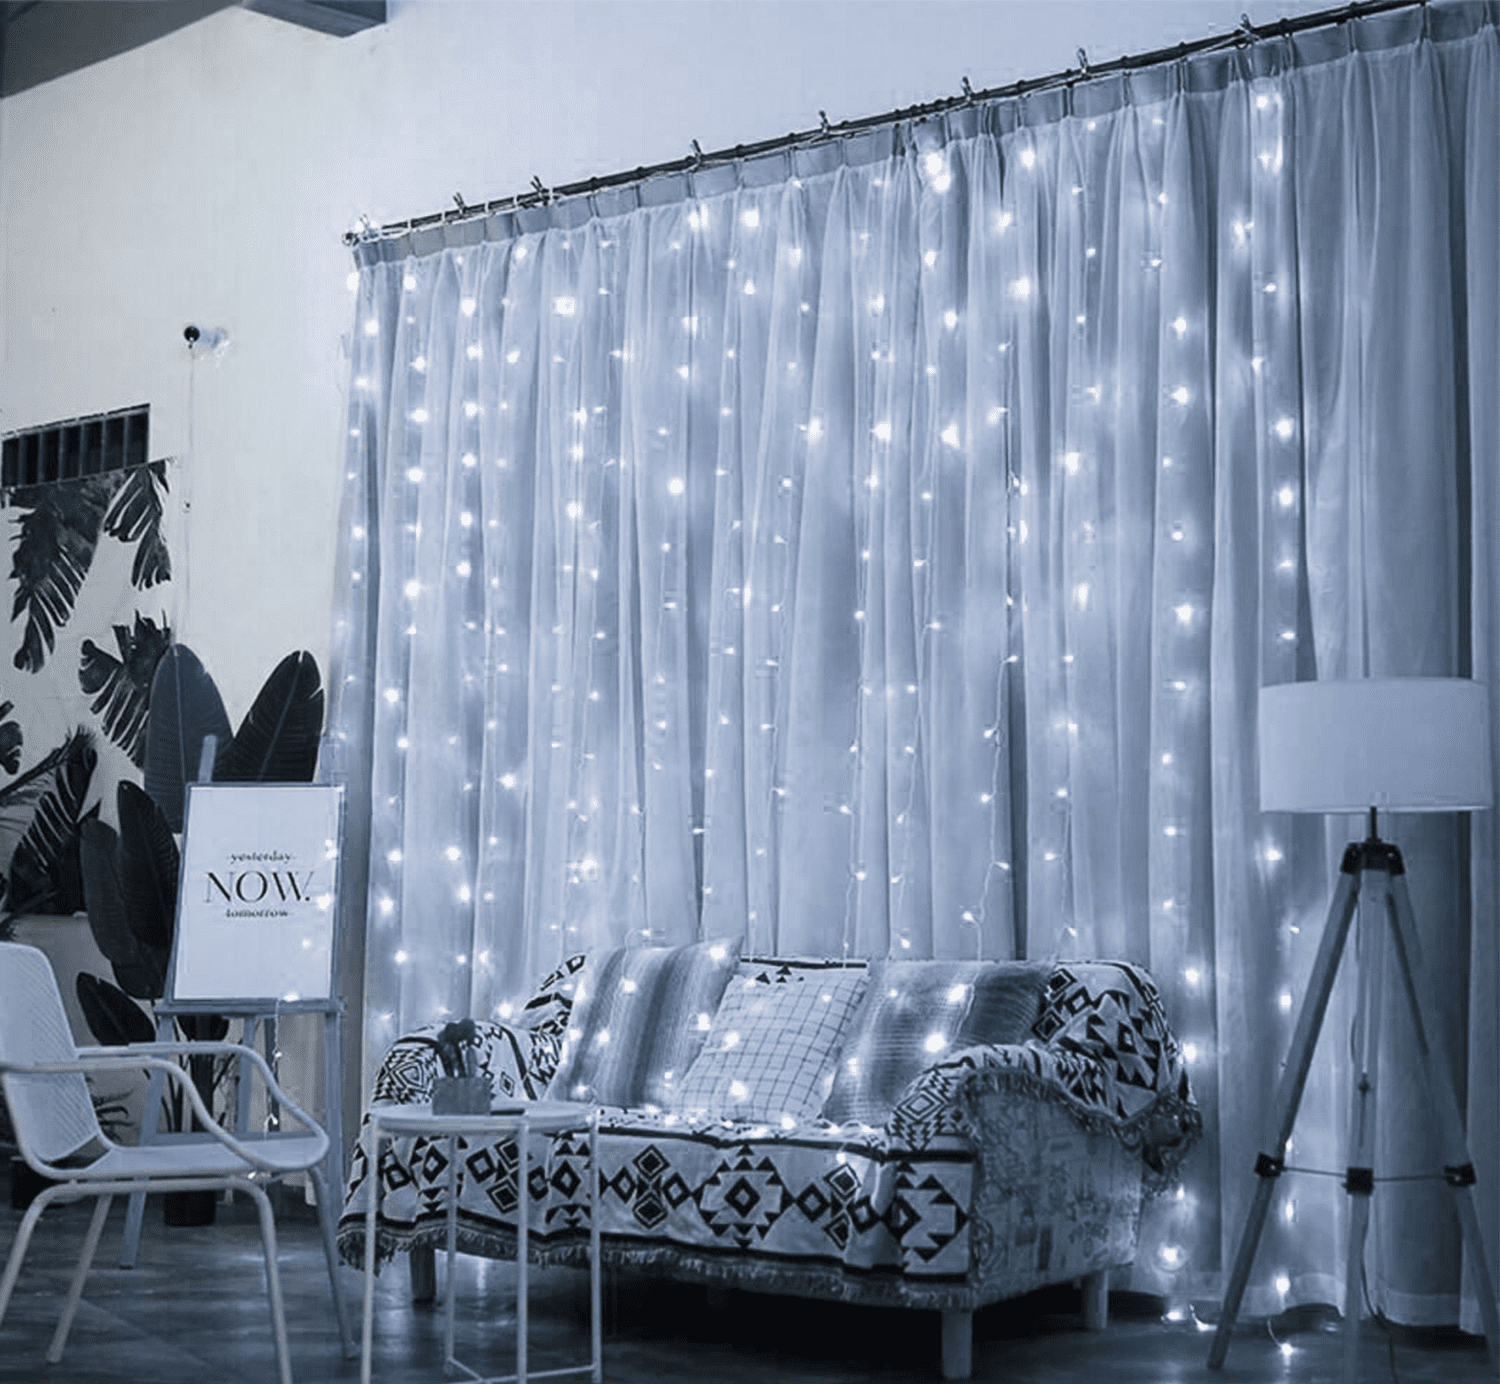 Led Curtain Display